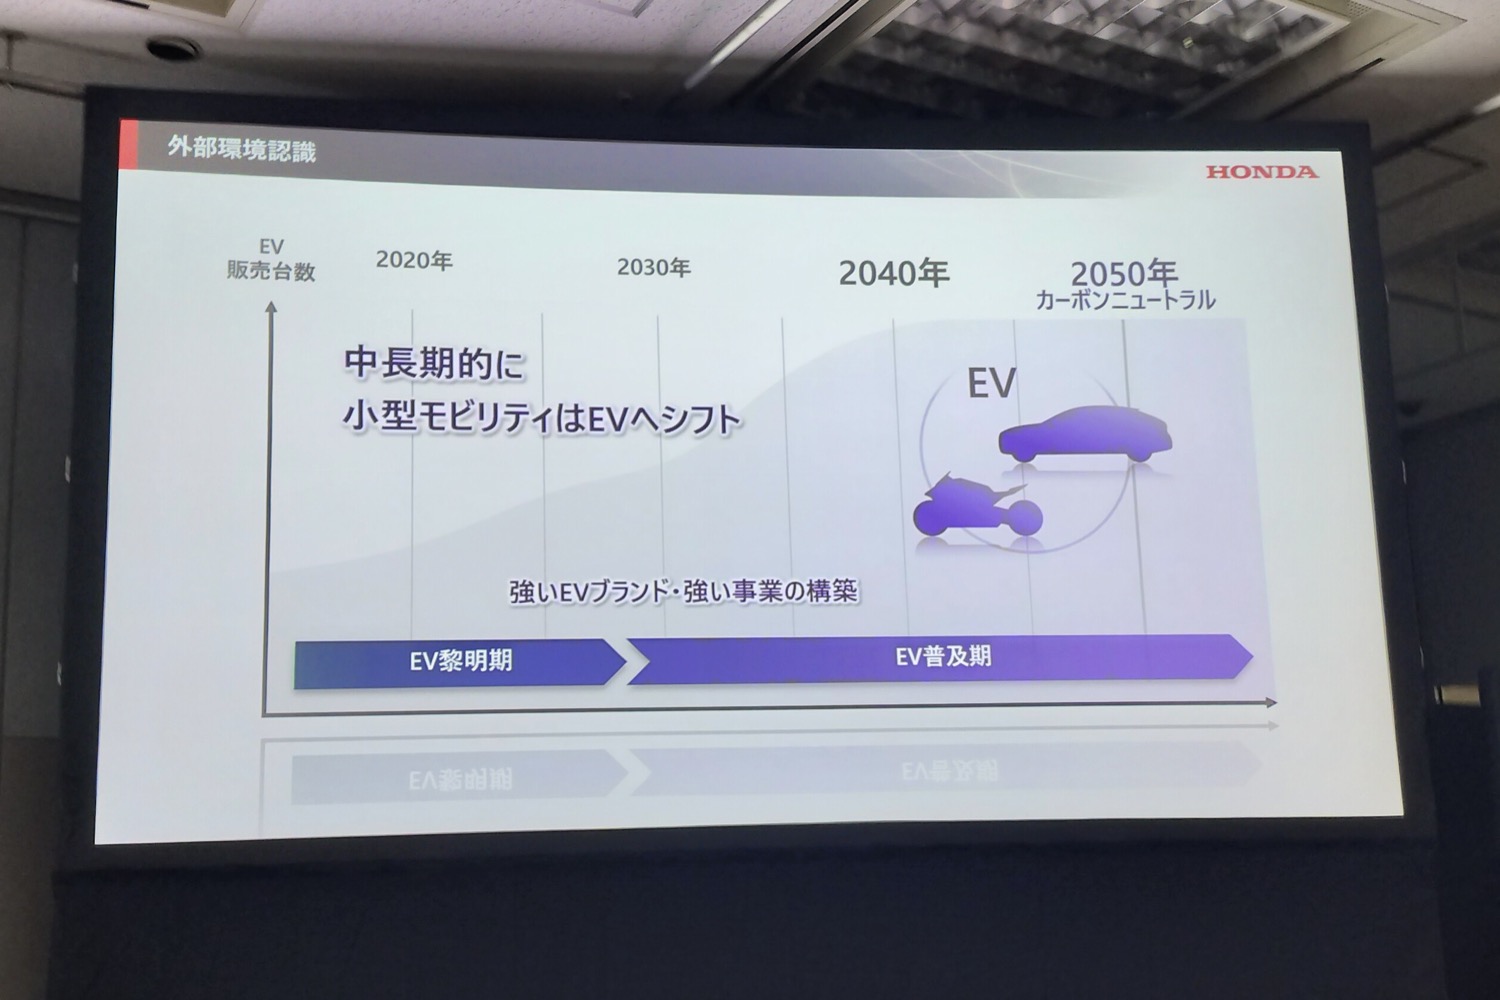 EVシフトのイメージ